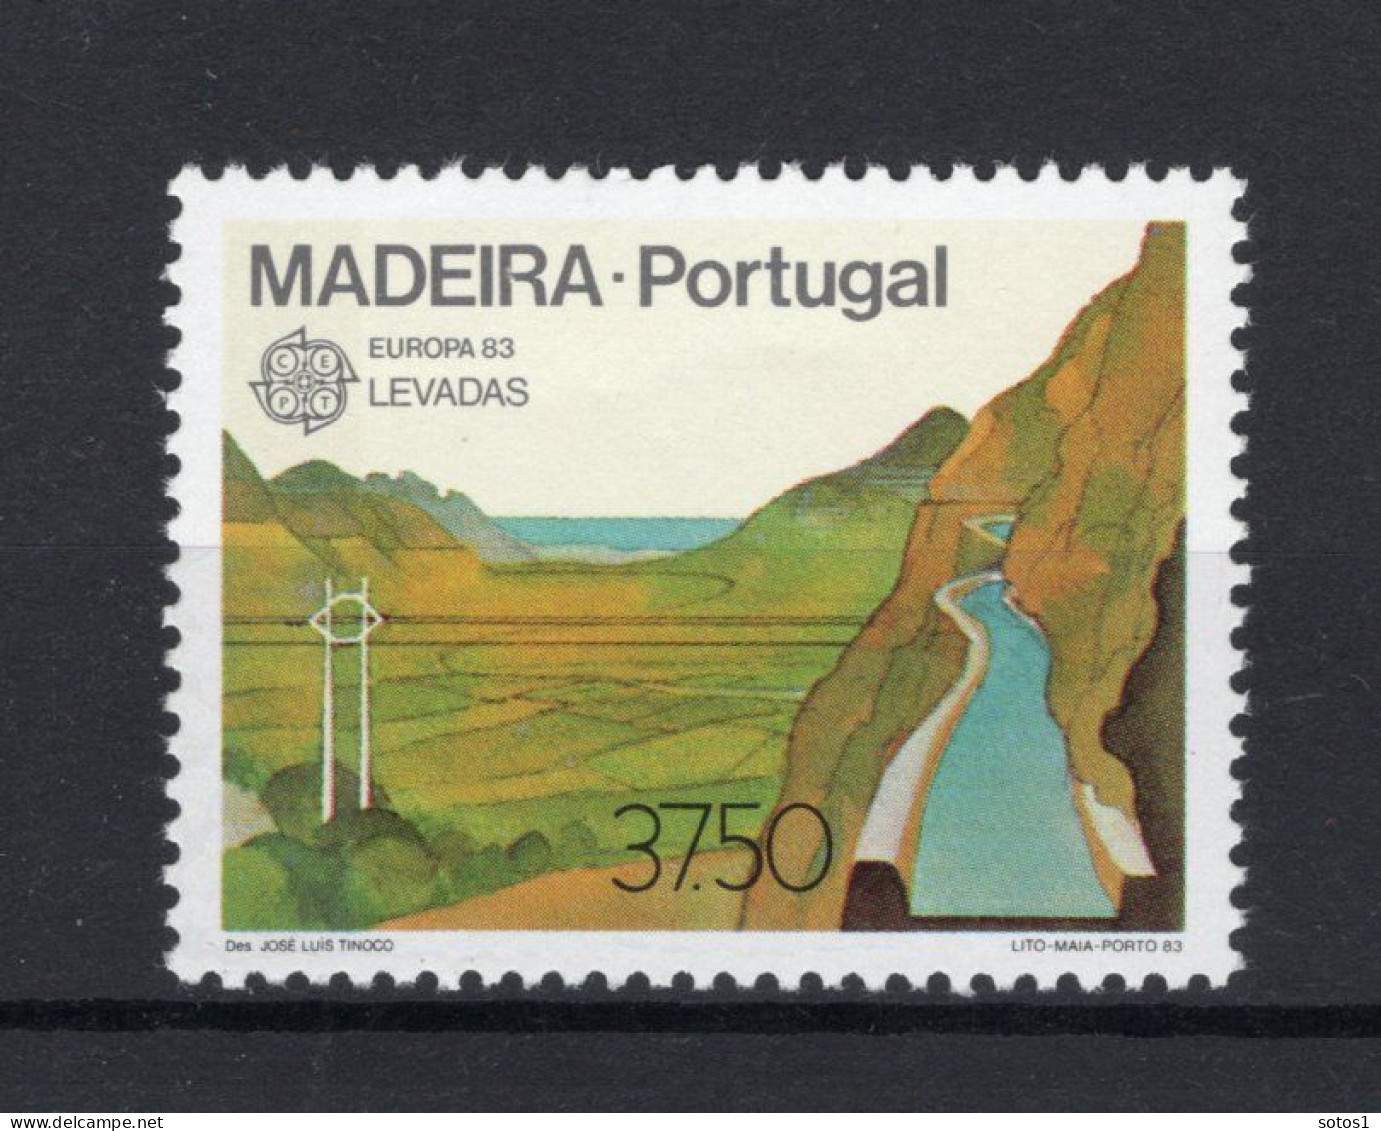 (B) Portugal - Madeira CEPT 84 MNH - 1983 -1 - 1983